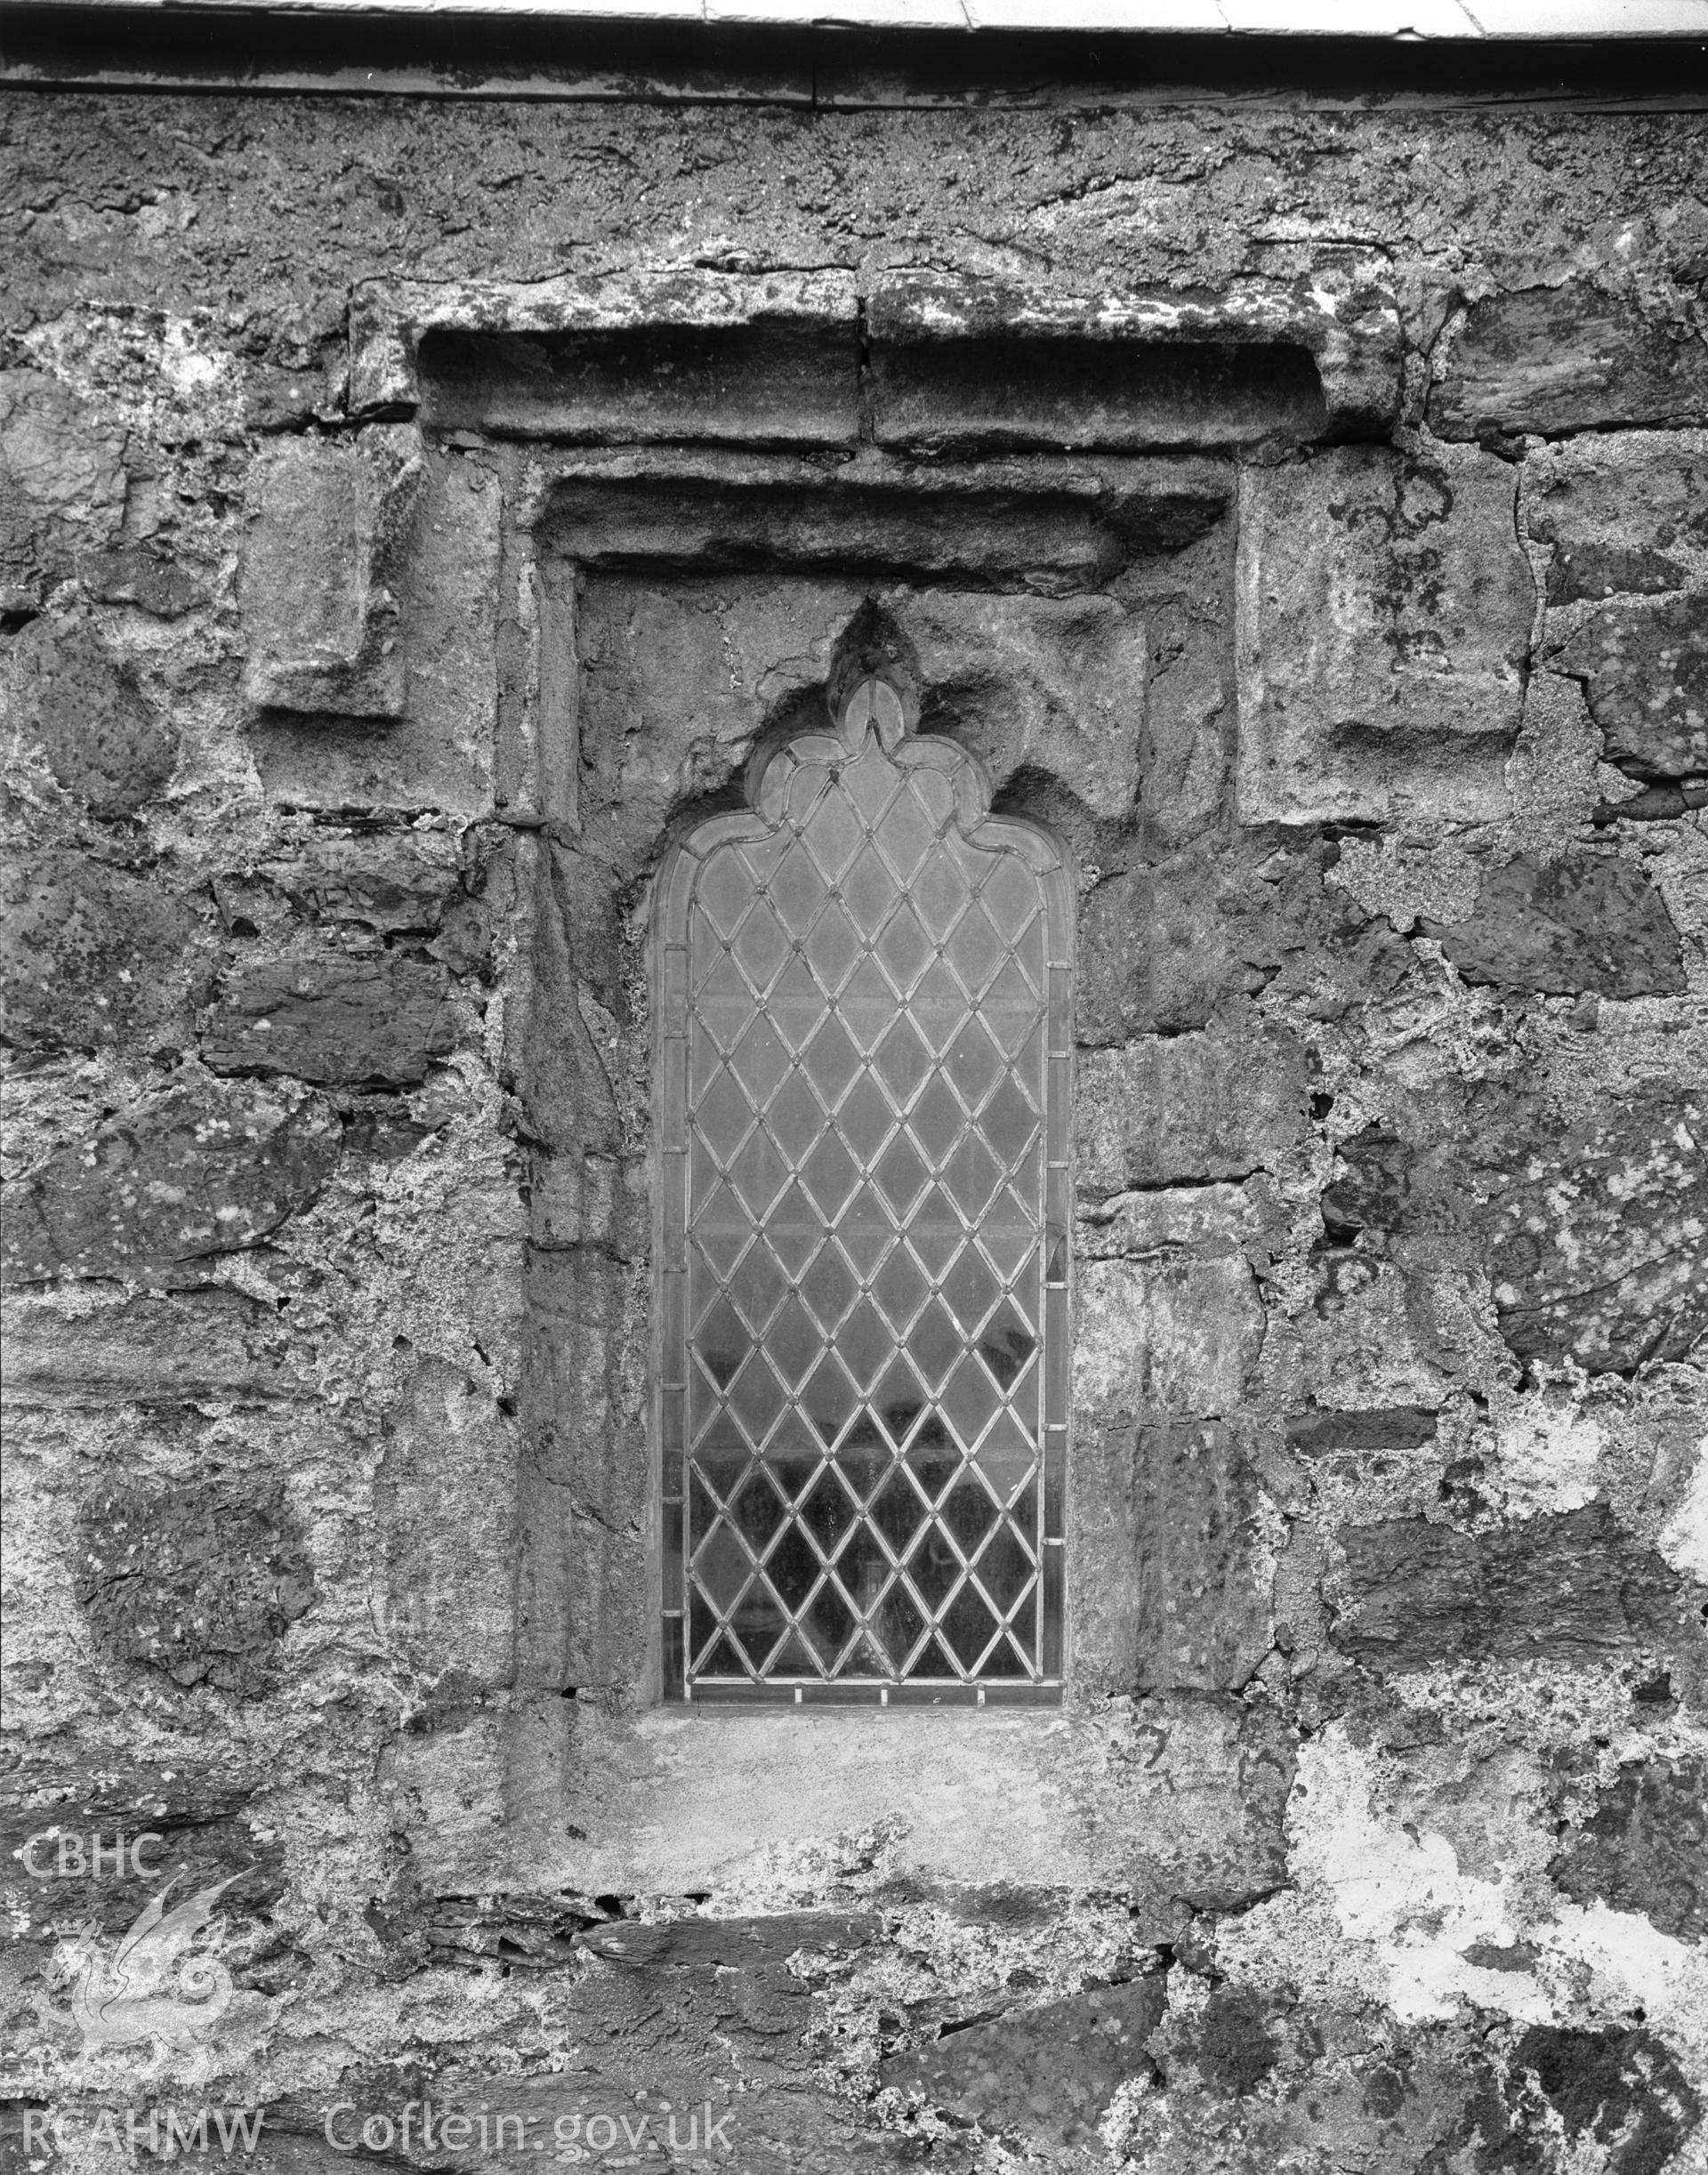 South window of chancel